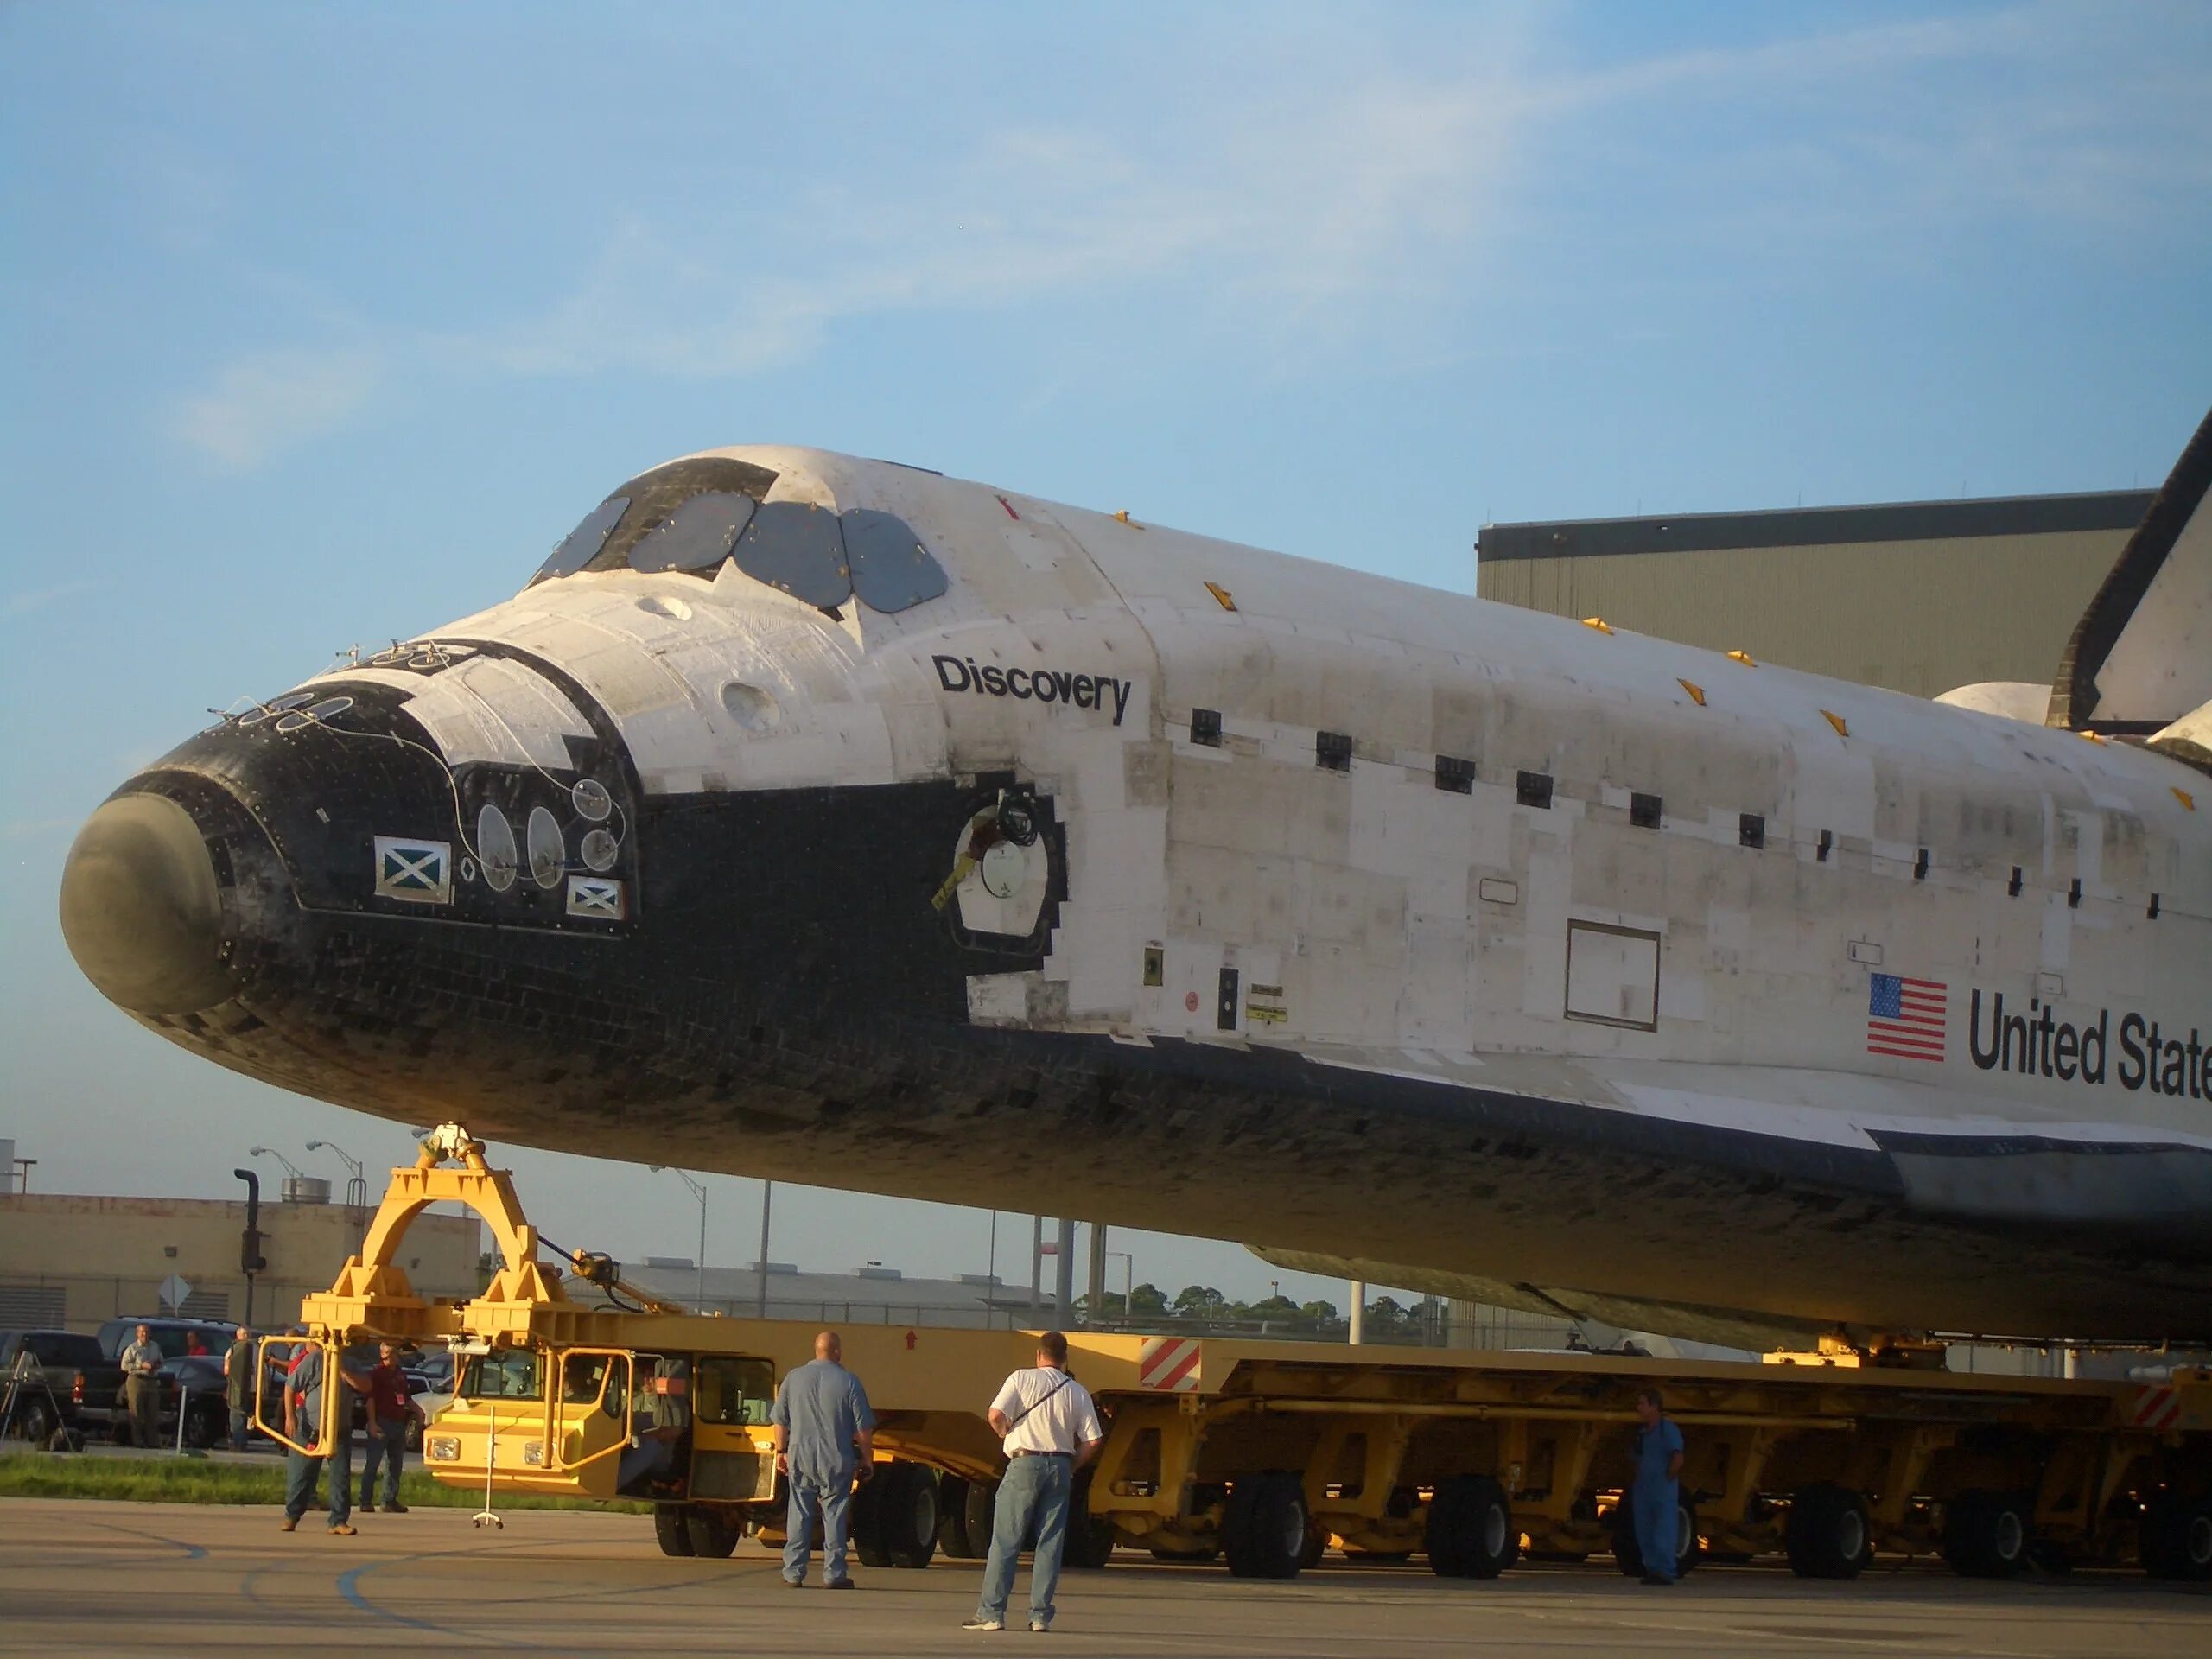 Space Shuttle Discovery грузовой отсек. Космический челнок Дискавери. Шаттл Дискавери Вашингтон. Спейс шаттл Дискавери. Дискавери док